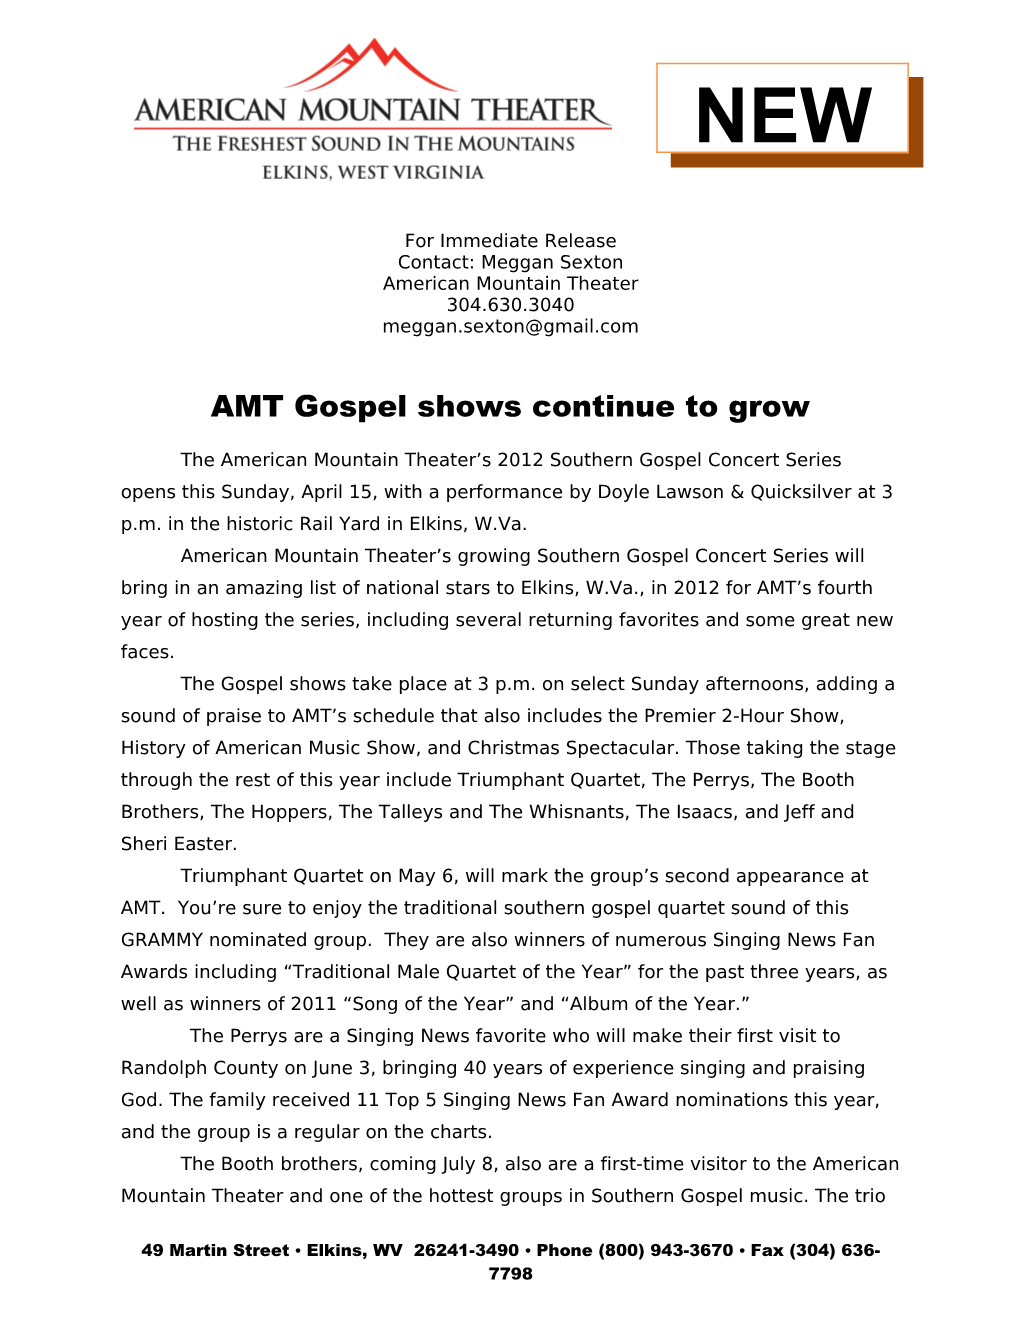 AMT Gospel Shows Continue to Grow